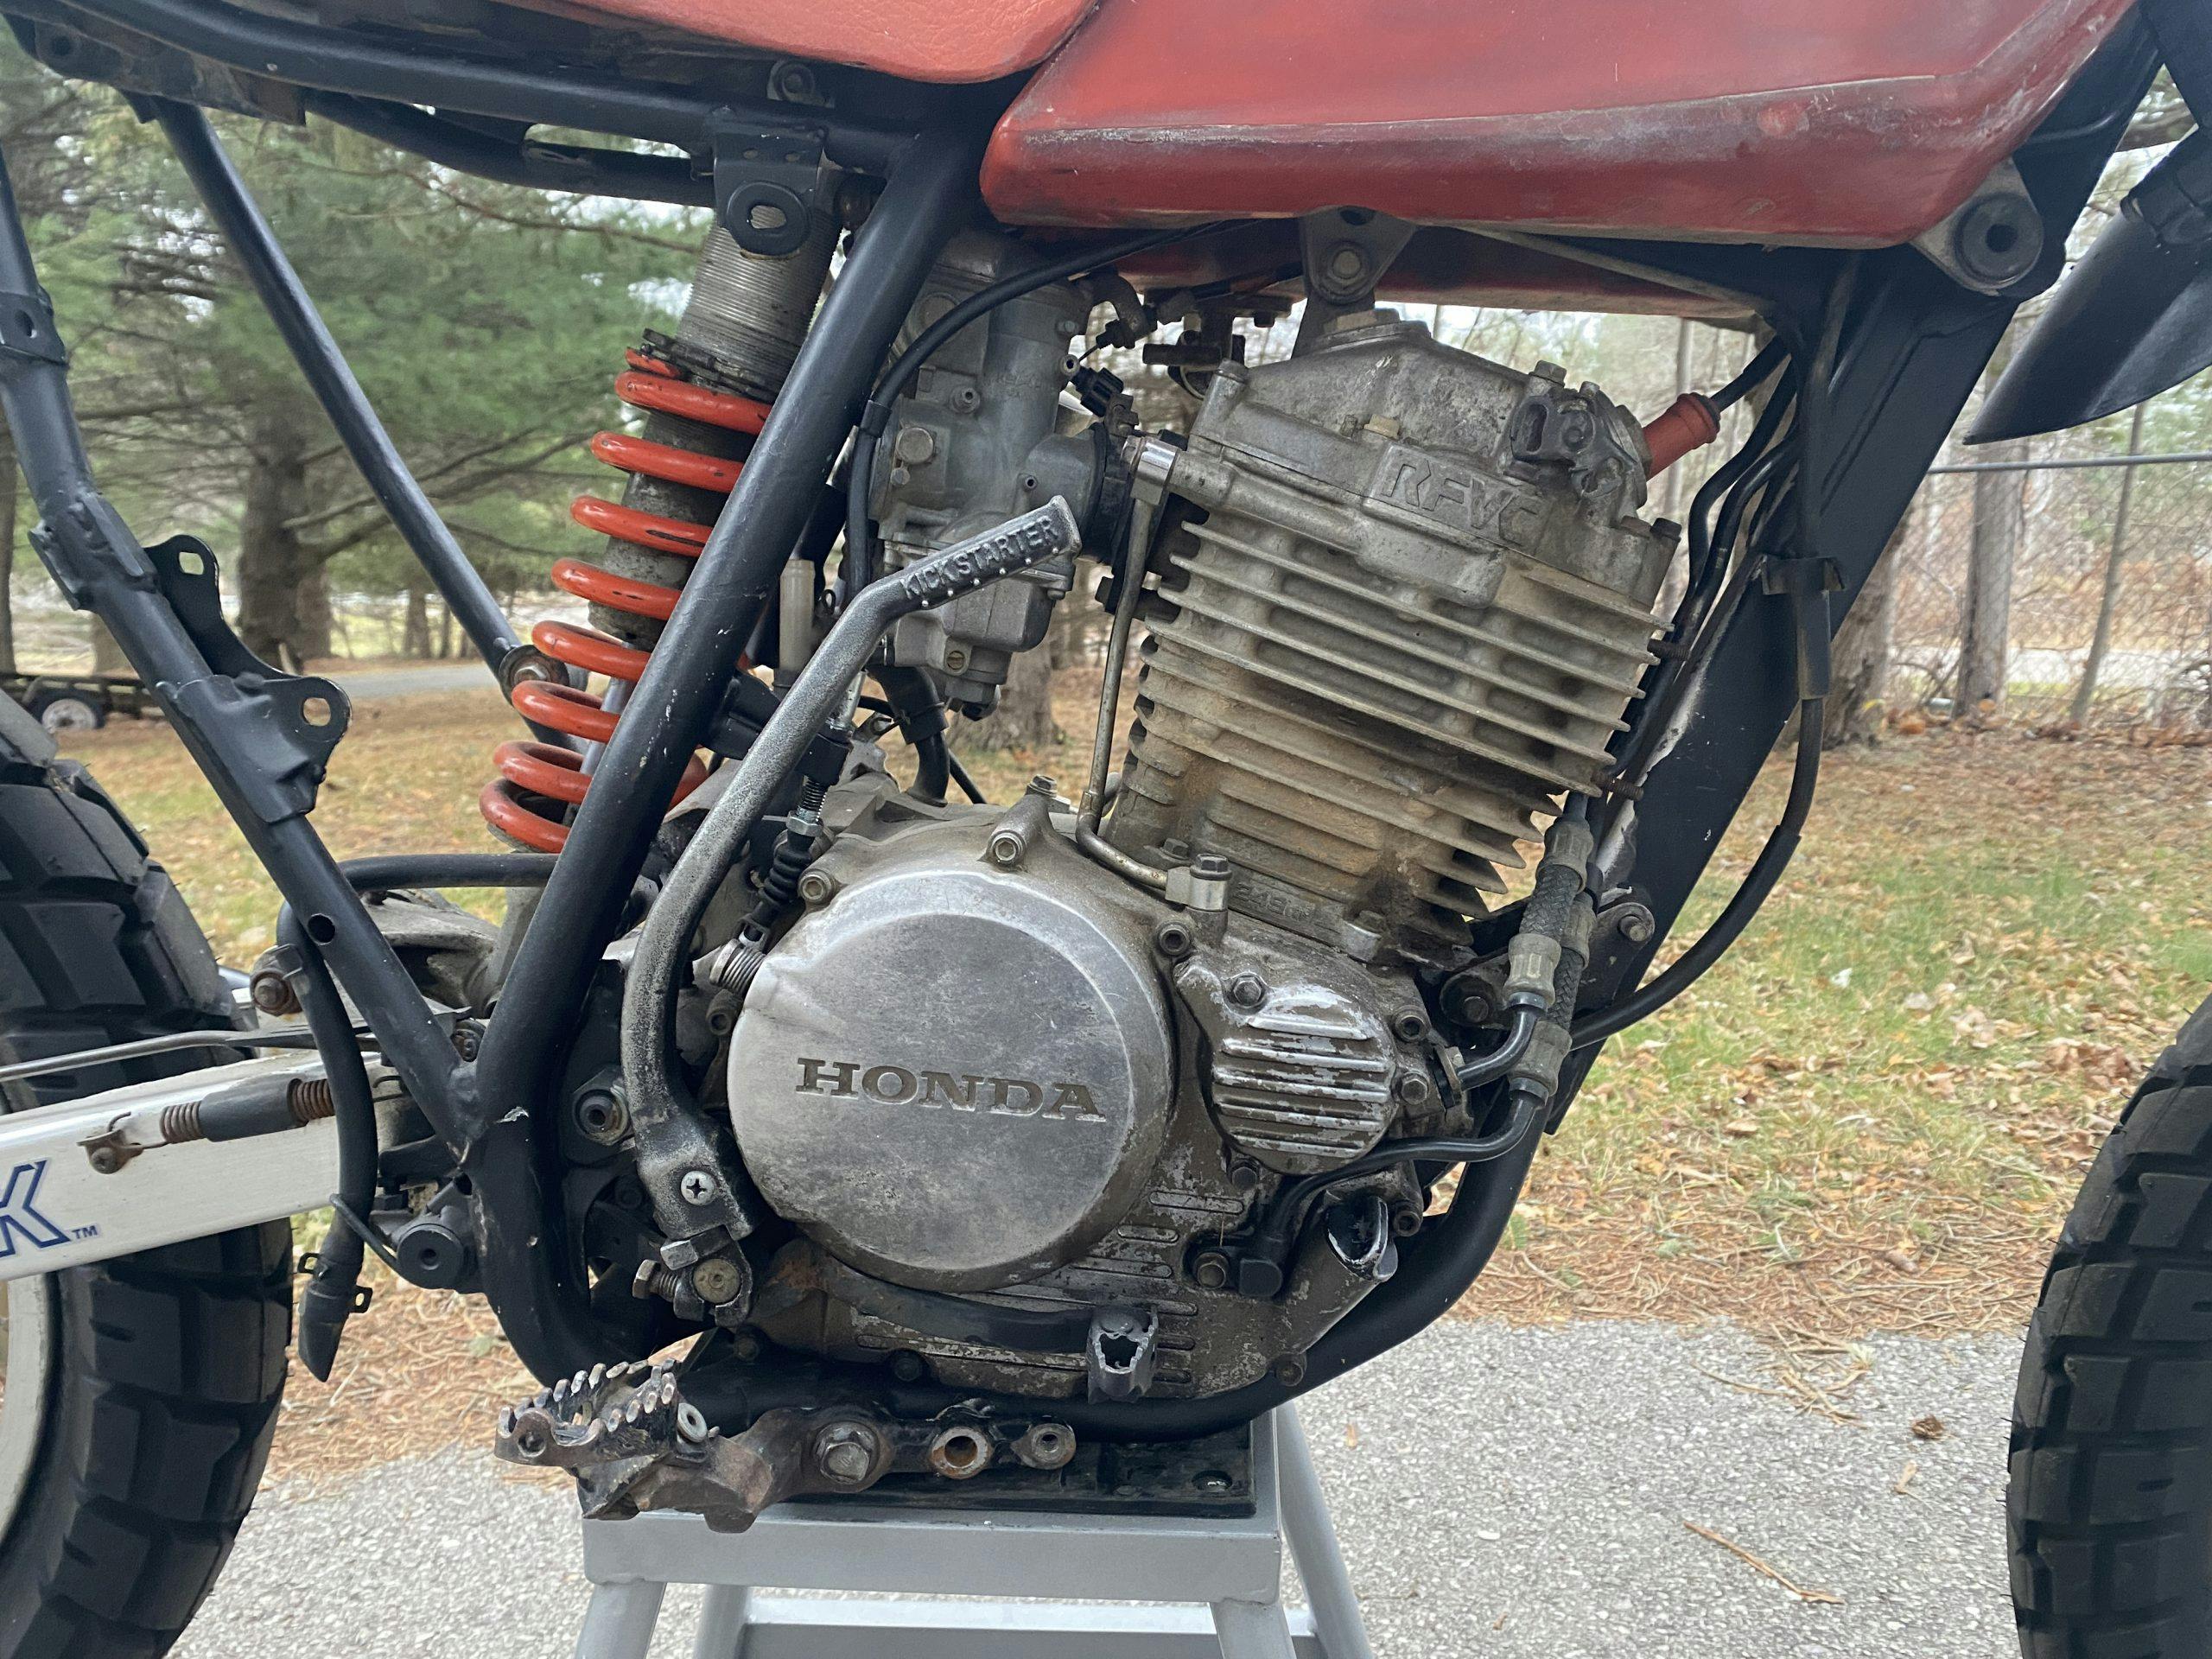 XR250R project bike engine